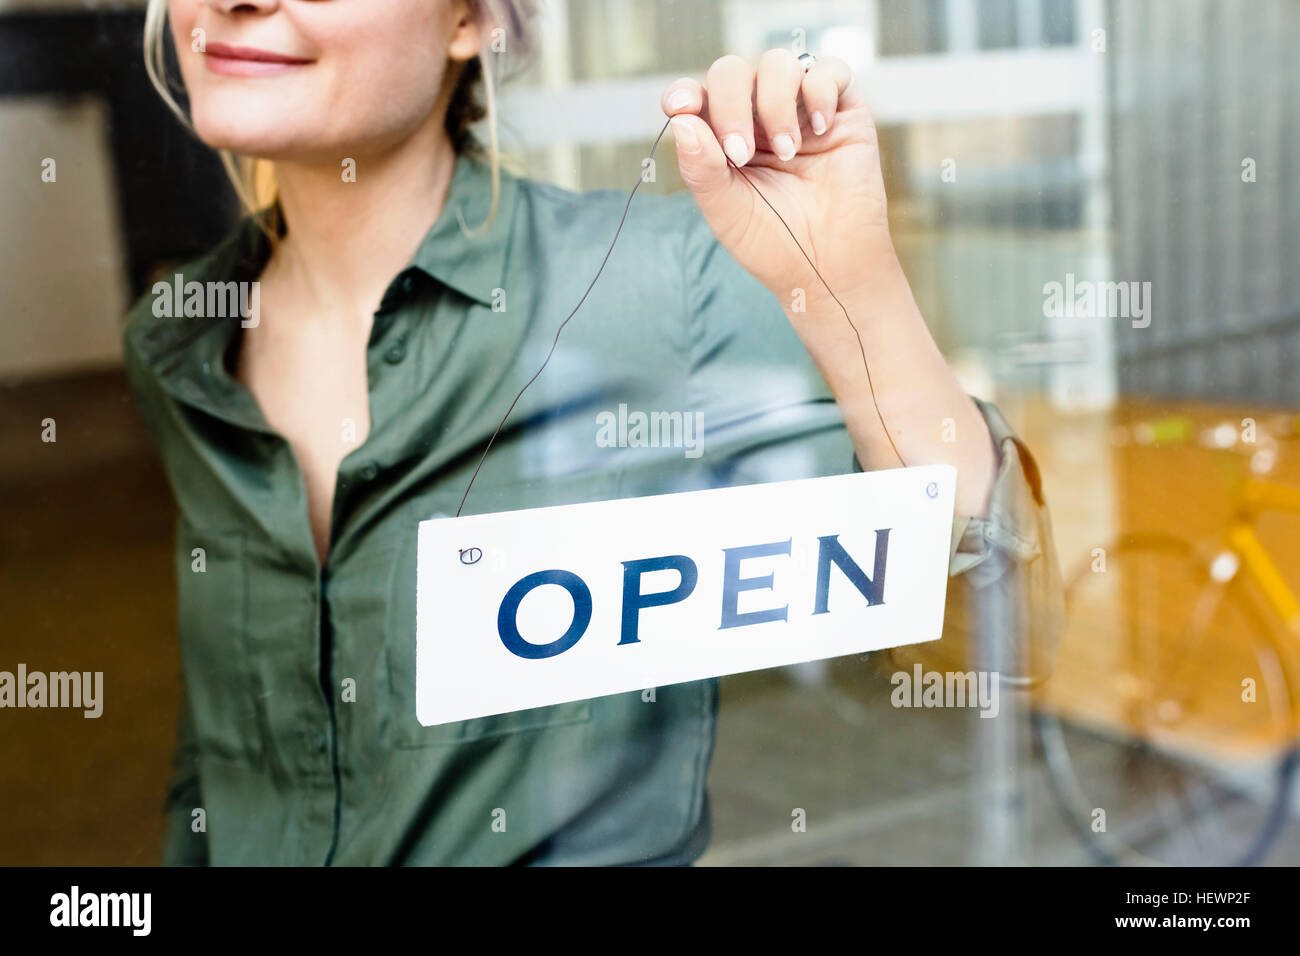 Woman placing open sign on glass door Stock Photo